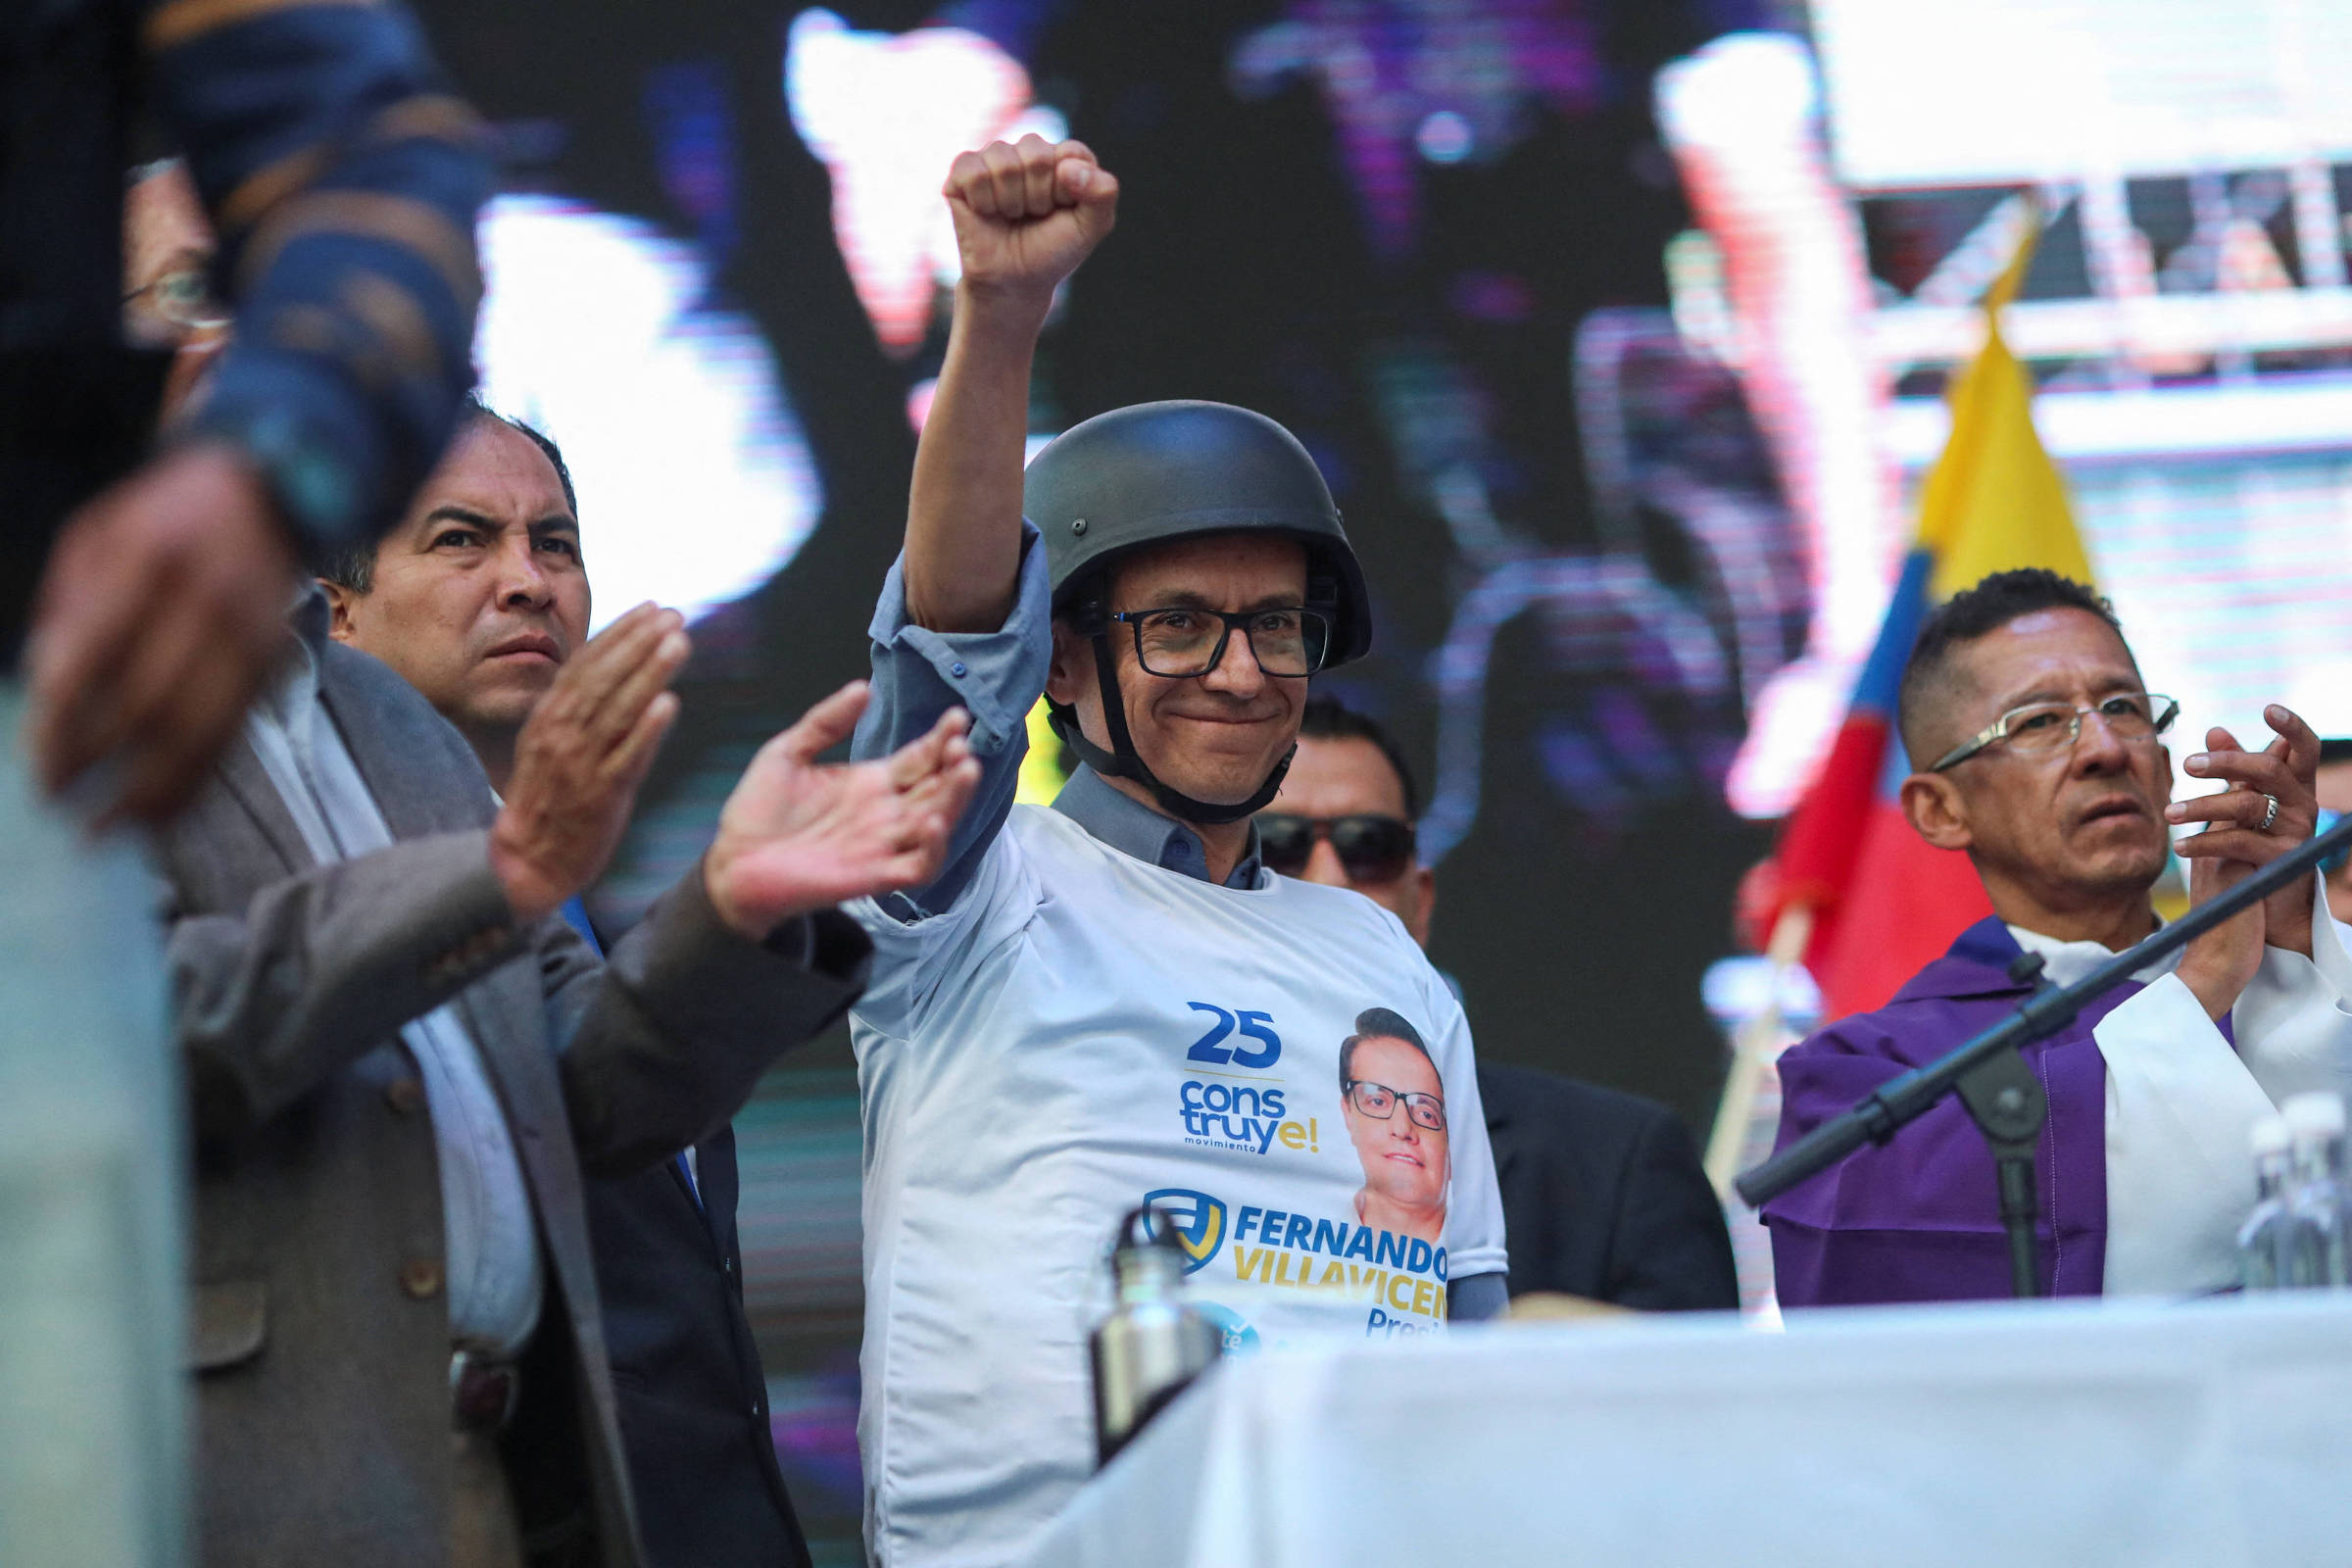 Surrogate of murdered candidate in Ecuador reports death threat